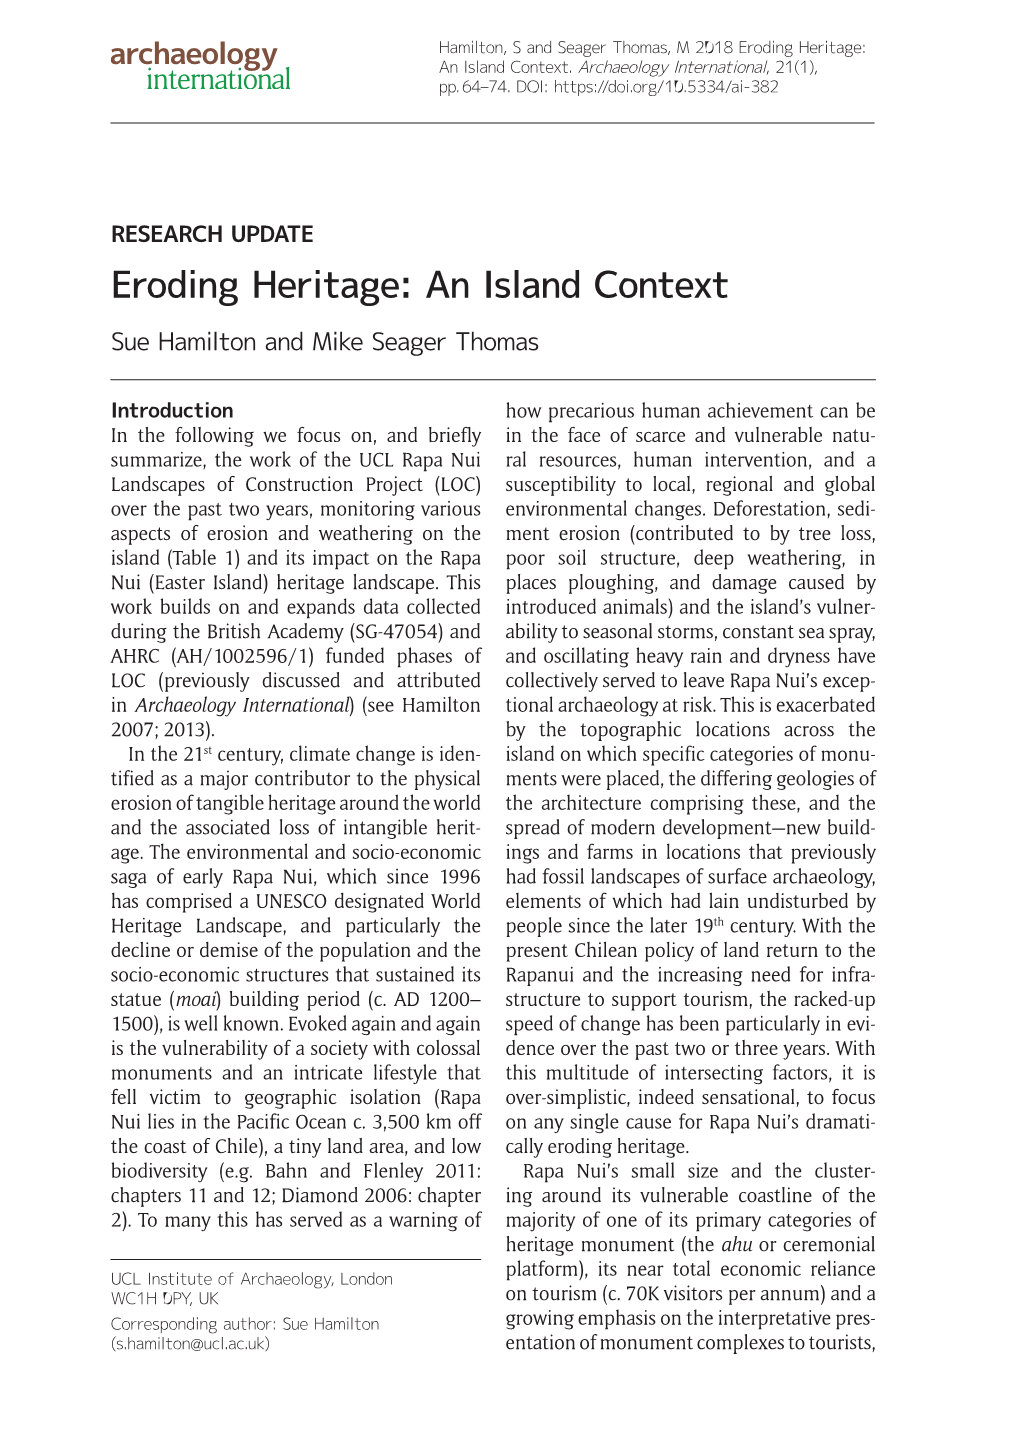 Eroding Heritage: an Island Context